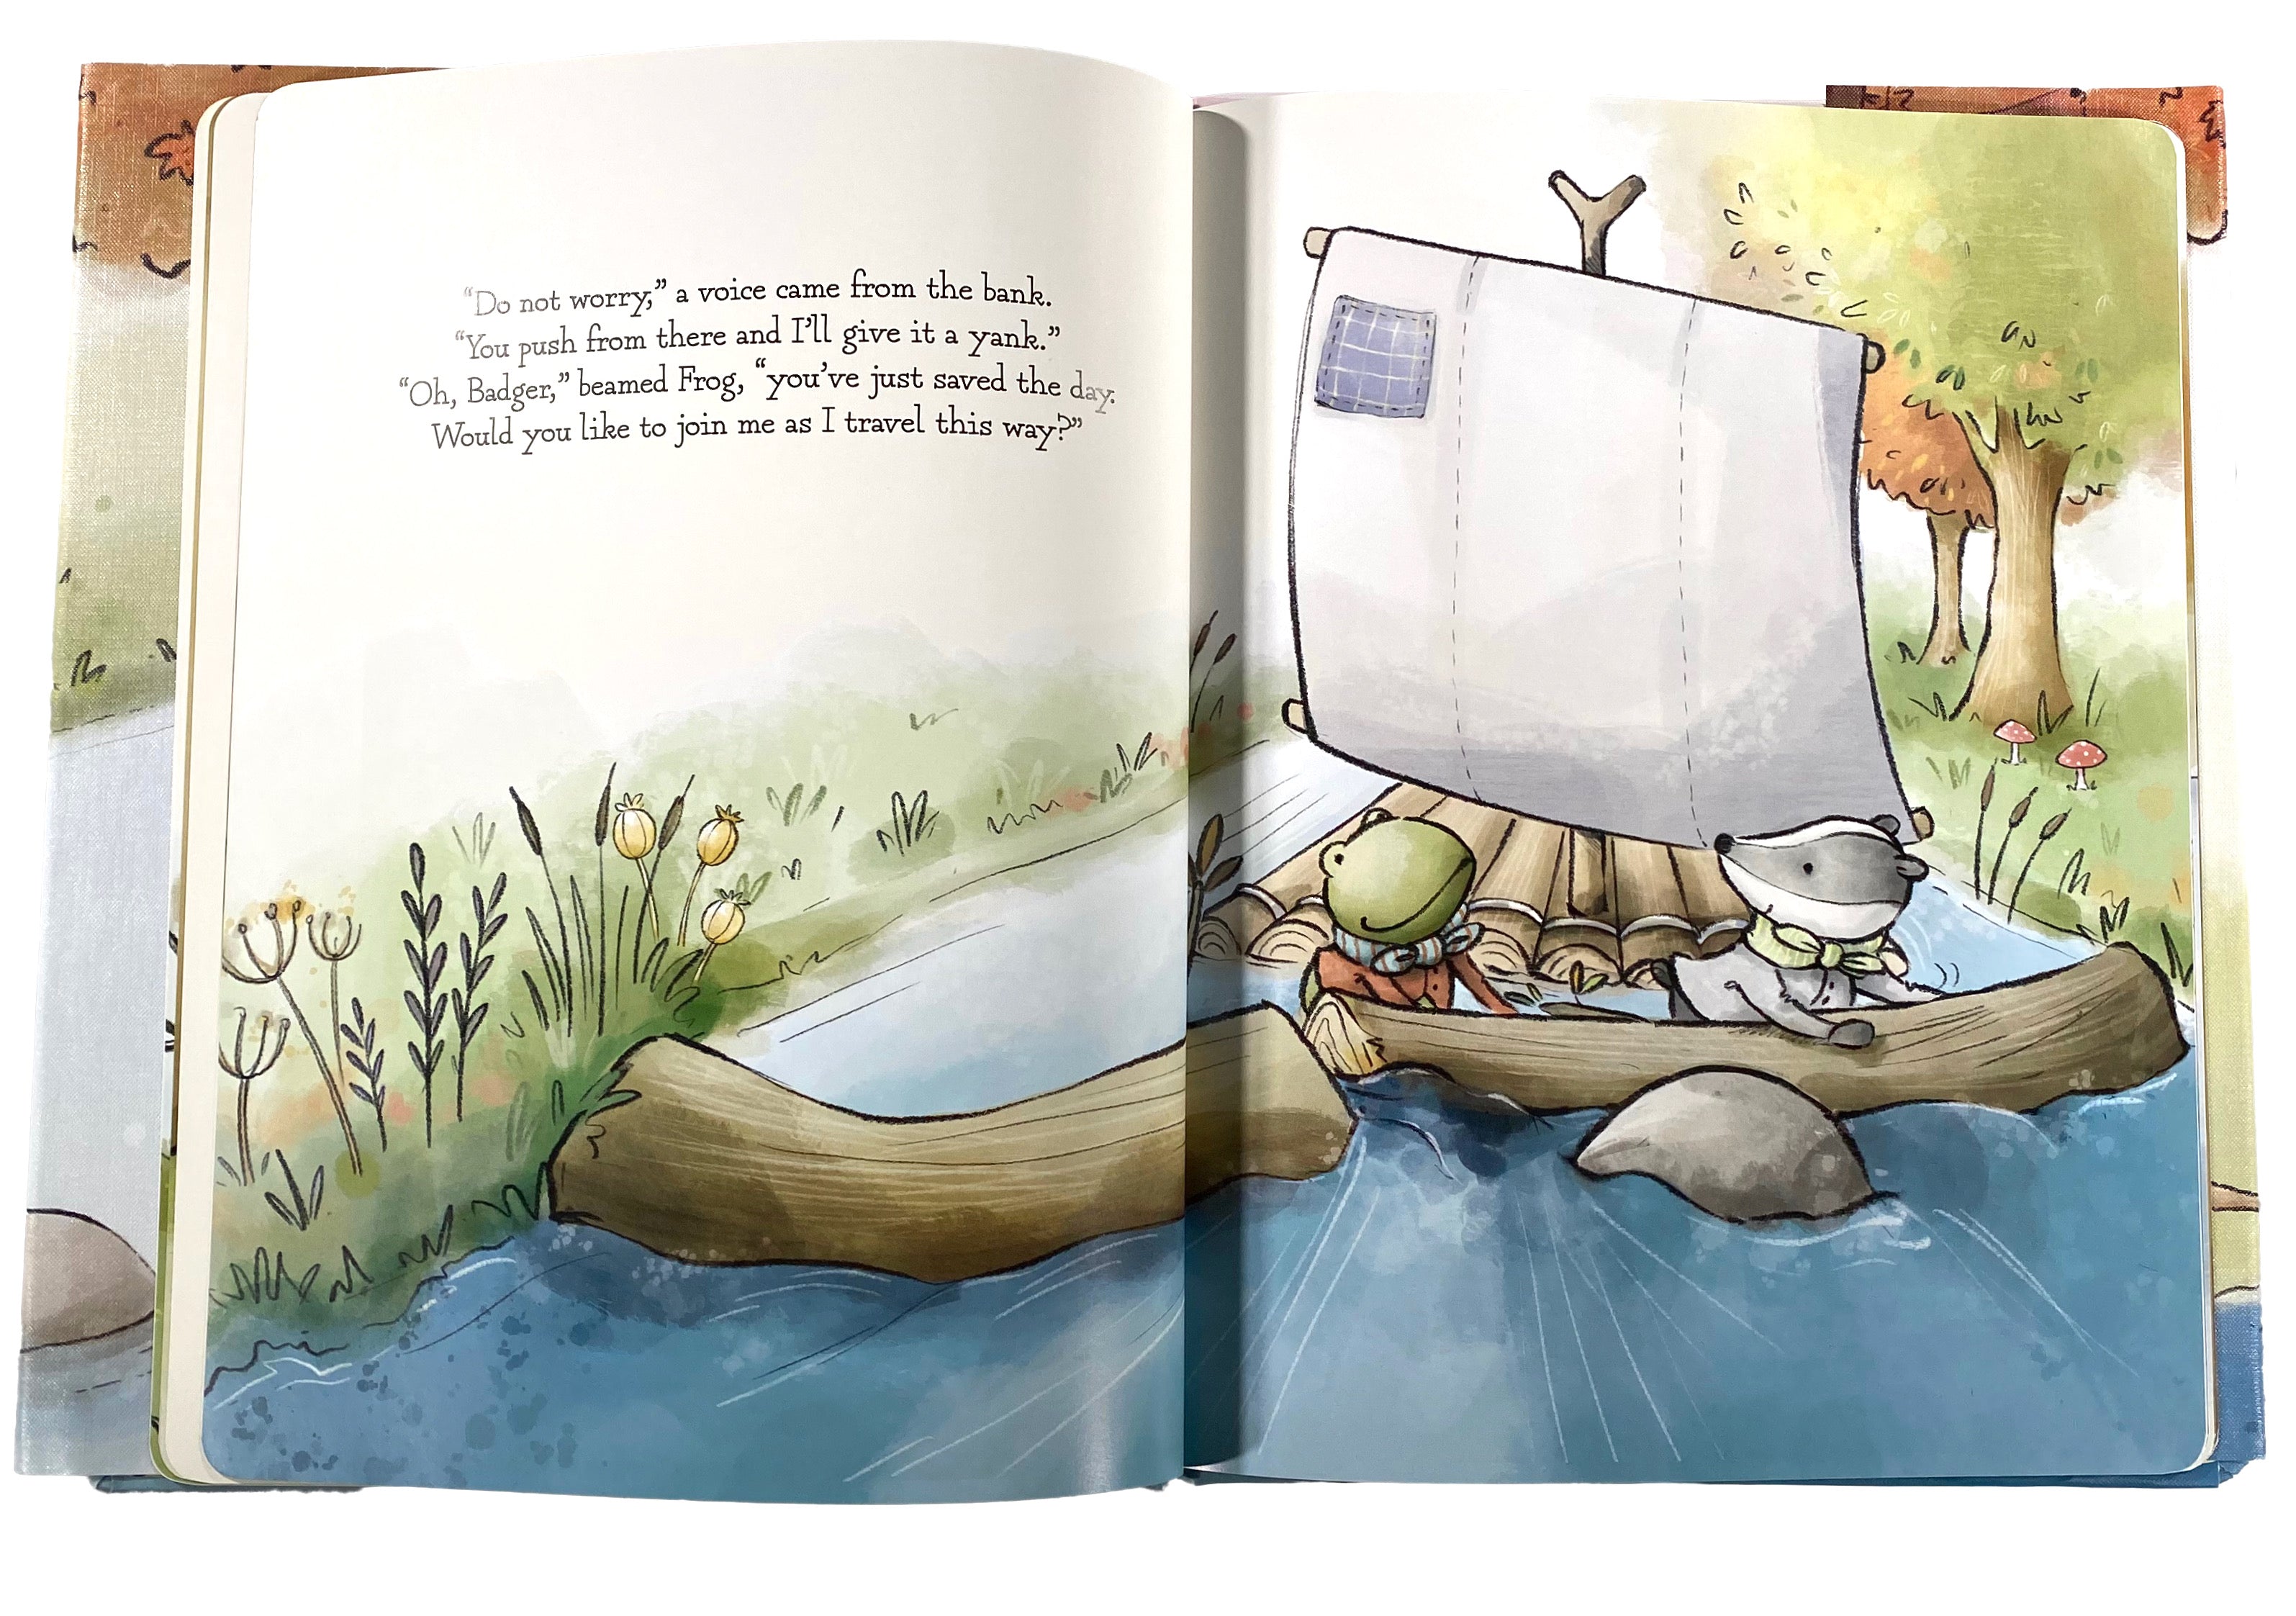 Riverside Ramblers A Journey Downstream - Jellycat Book    